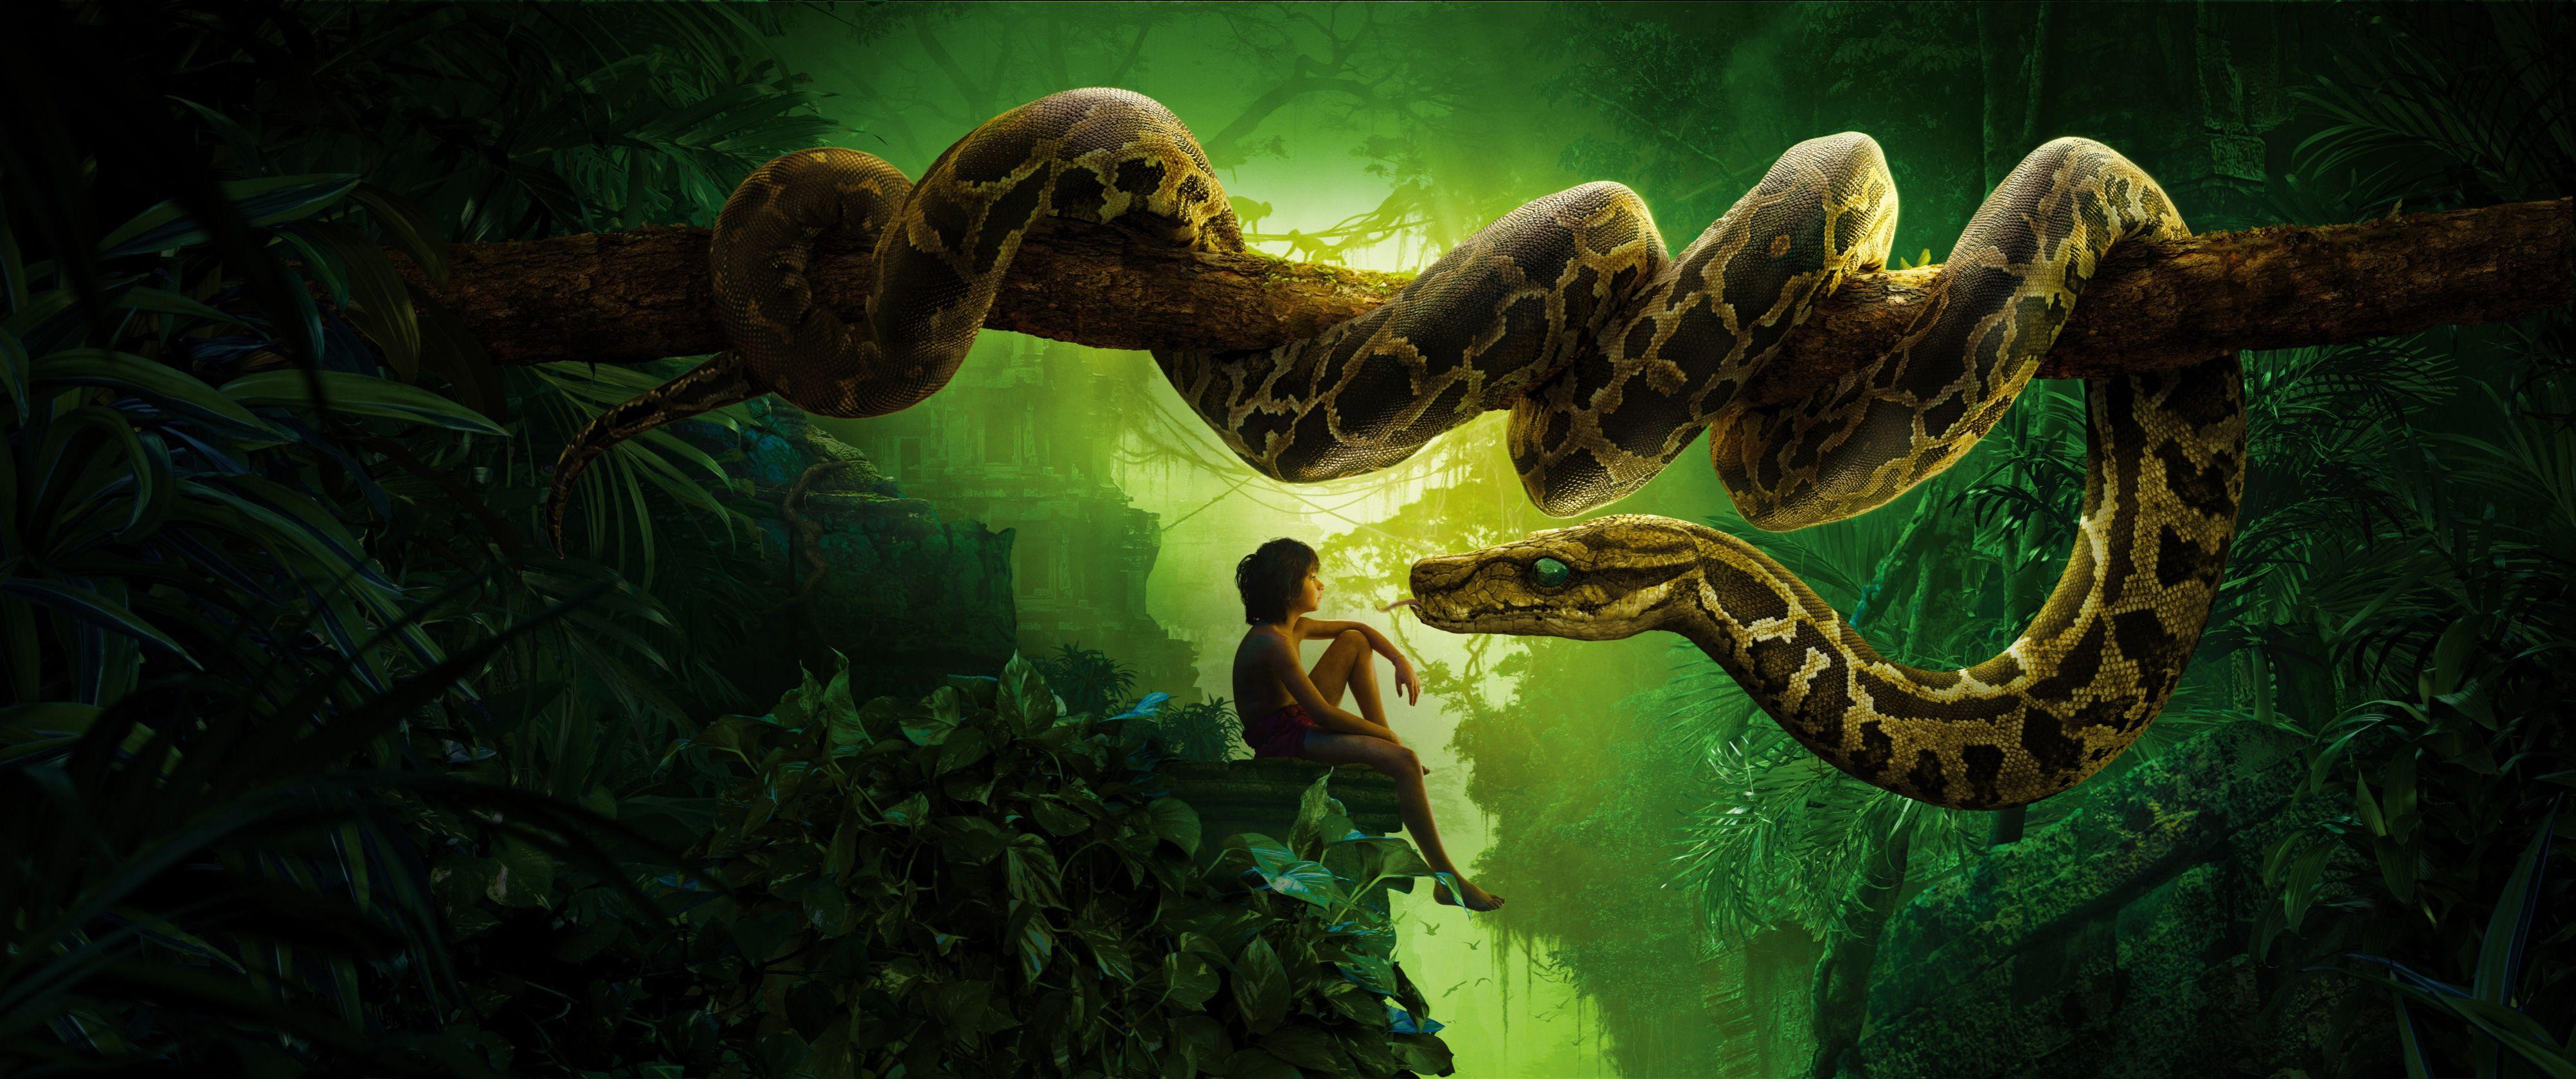 Wallpaper Jungle Book, Mowgli, Kaa, Snake, Movies